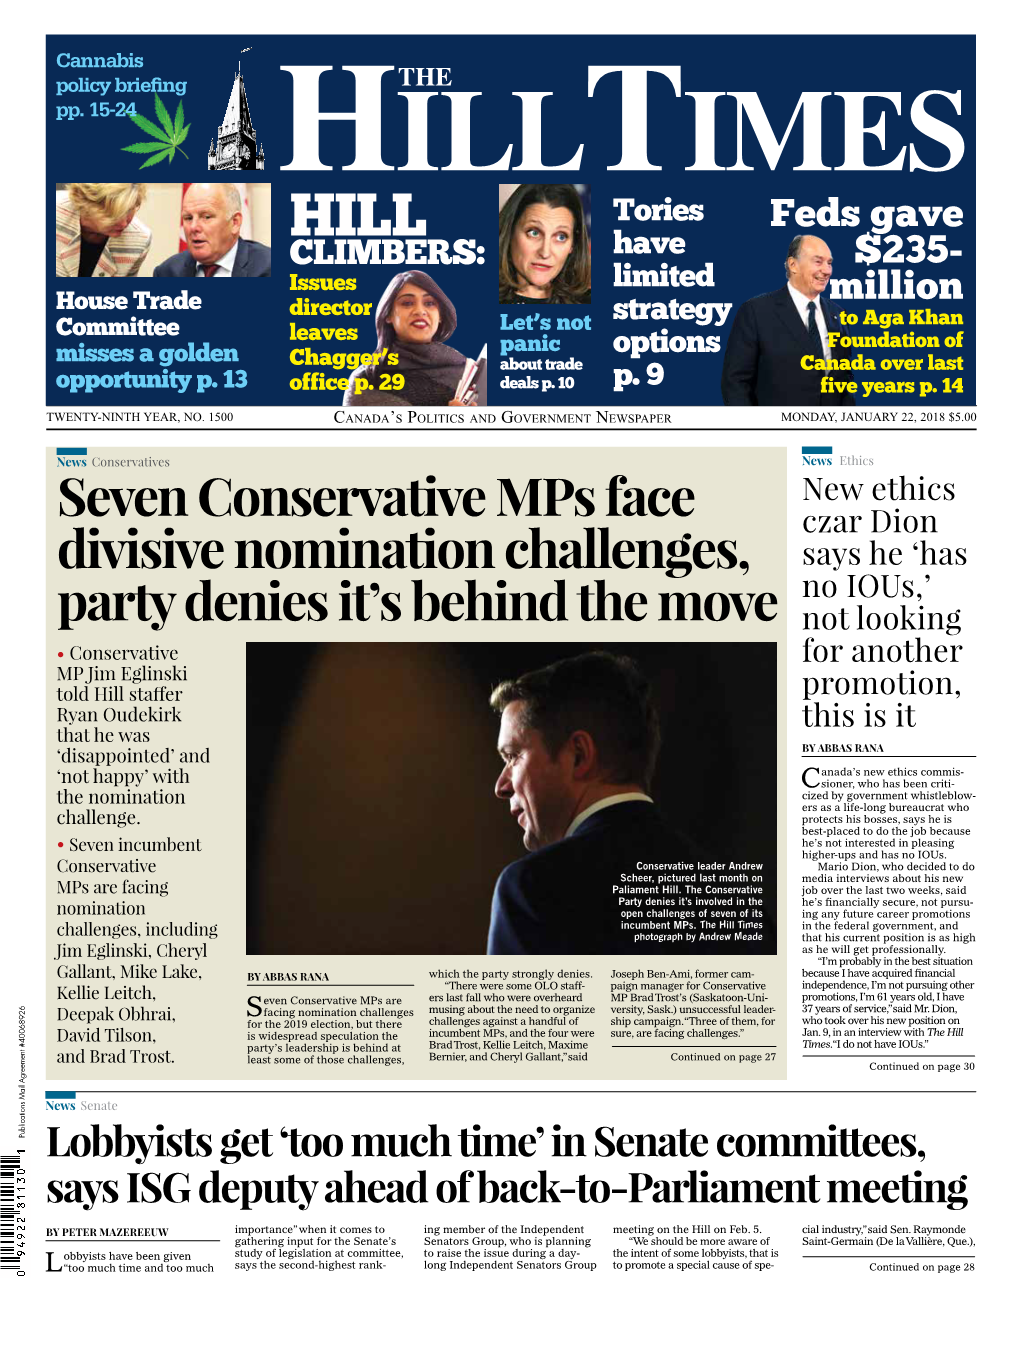 Seven Conservative Mps Face Divisive Nomination Challenges, Party